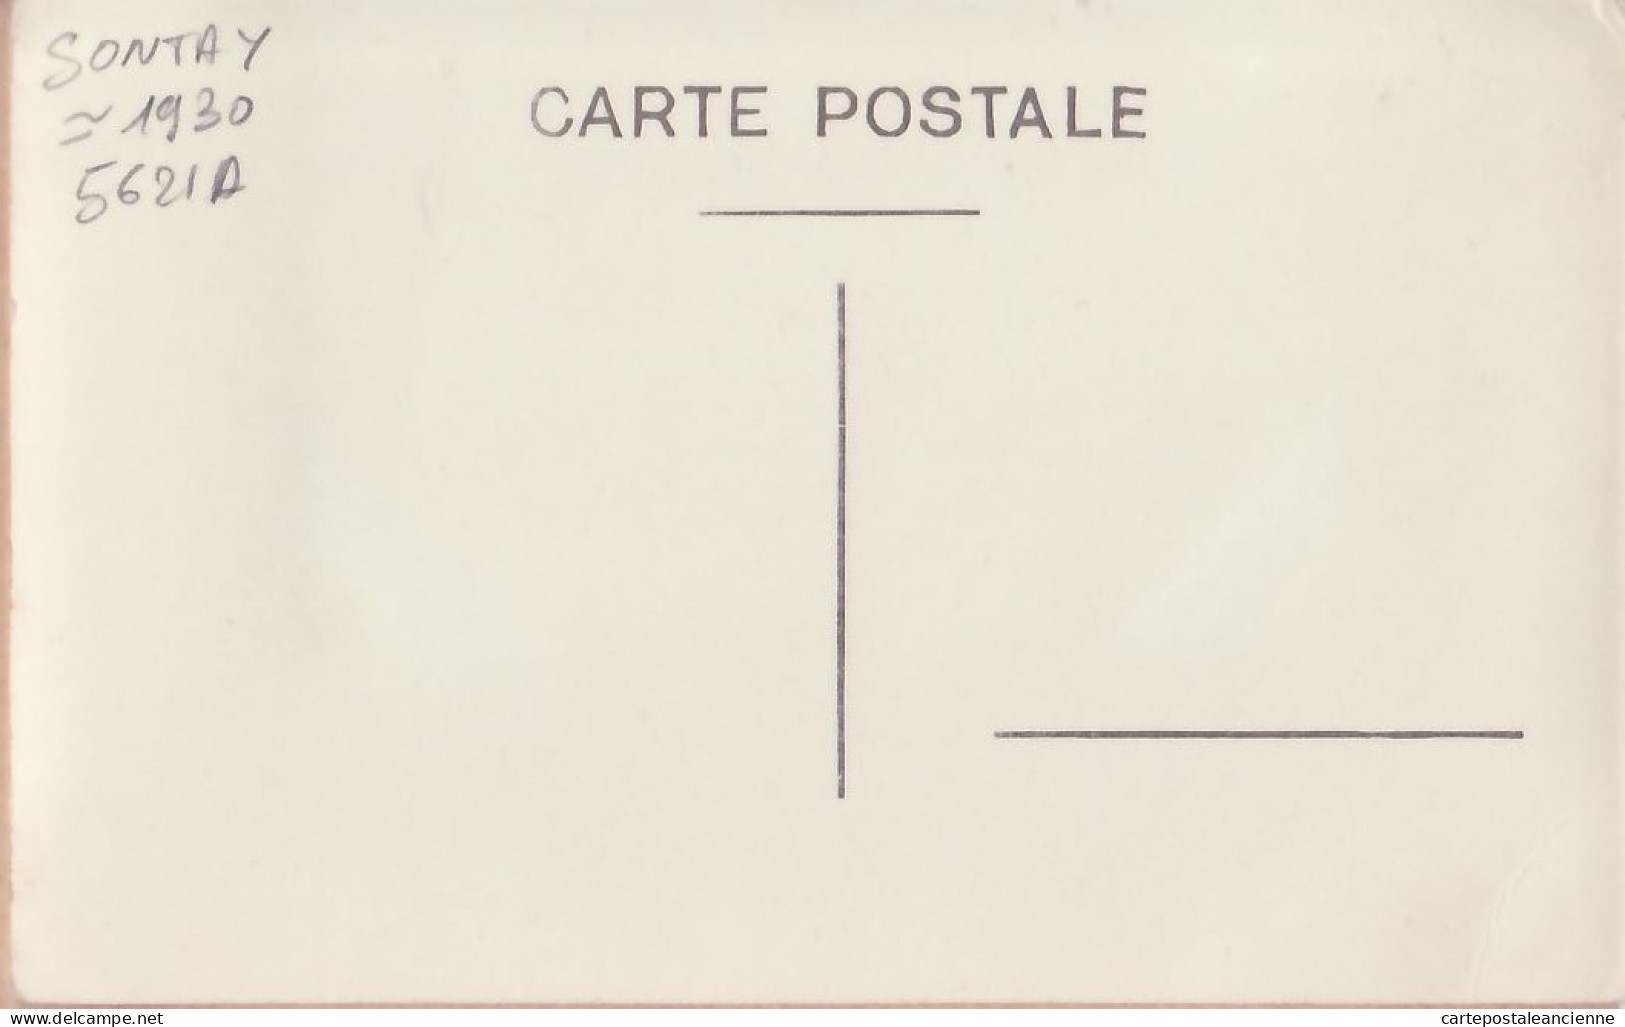 01004 ● Carte-Photo Région TONG SONTAY Rue Lac Parc Jardin 1930s Issue Album ROSSIGNOL 4em RAC Coloniale Indochine - Vietnam